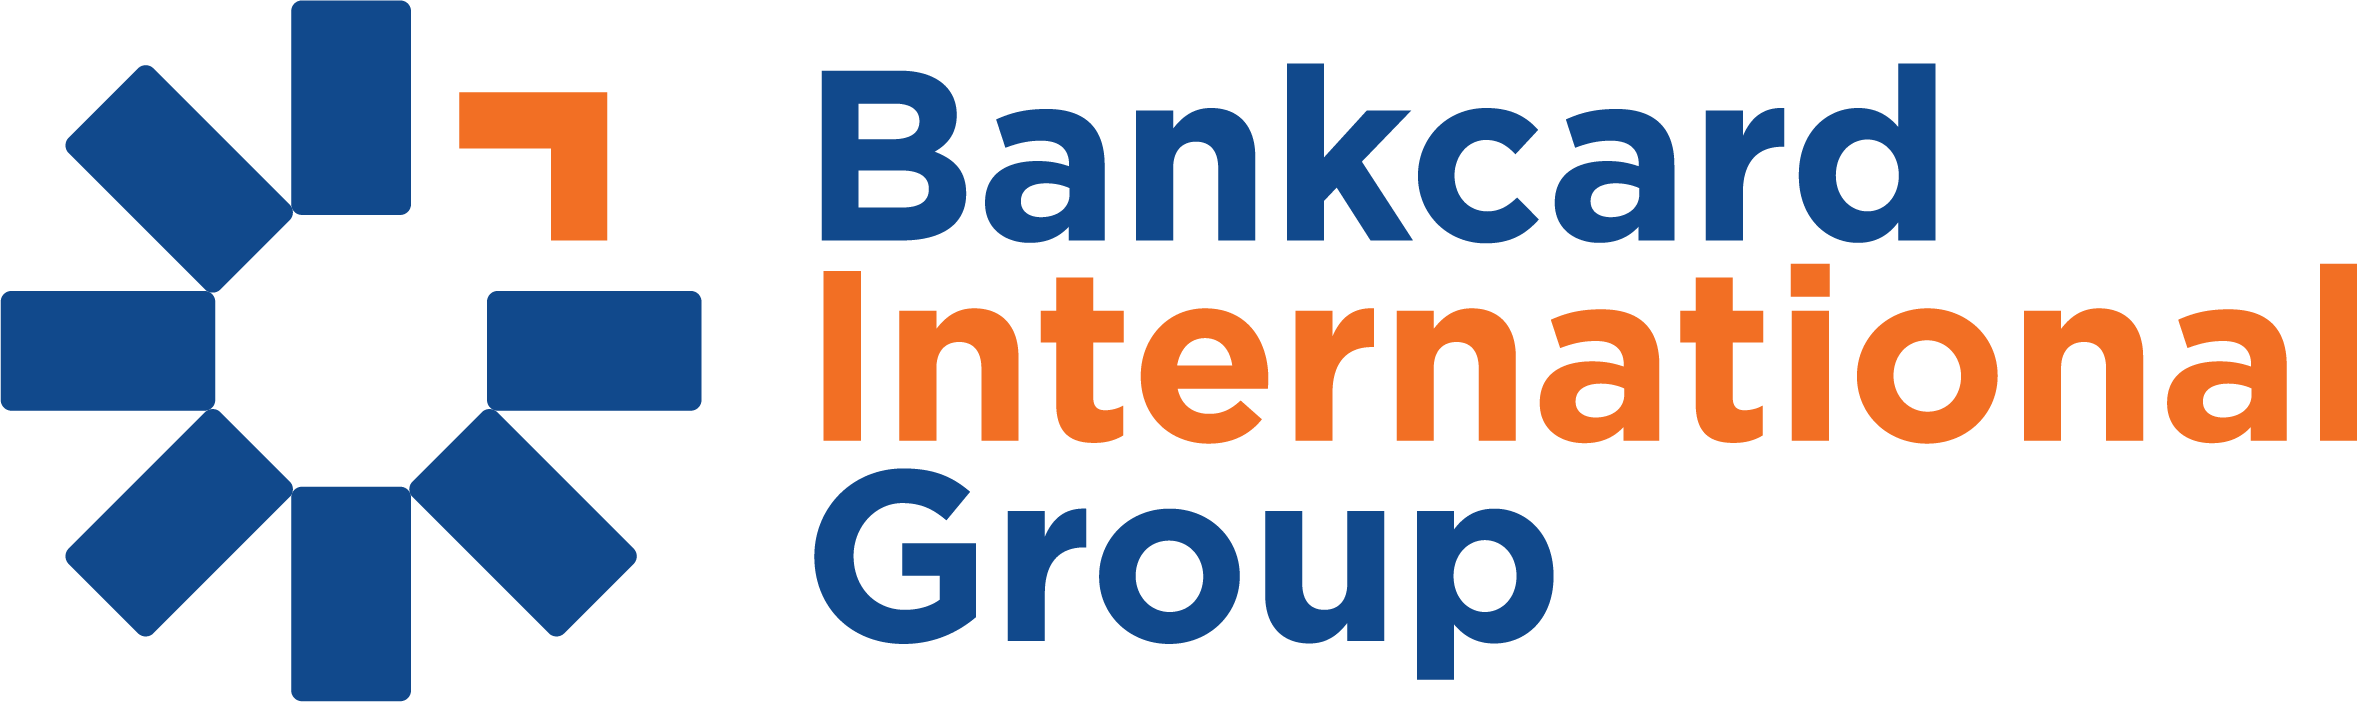 Bankcard International Group - High Risk Merchant Services